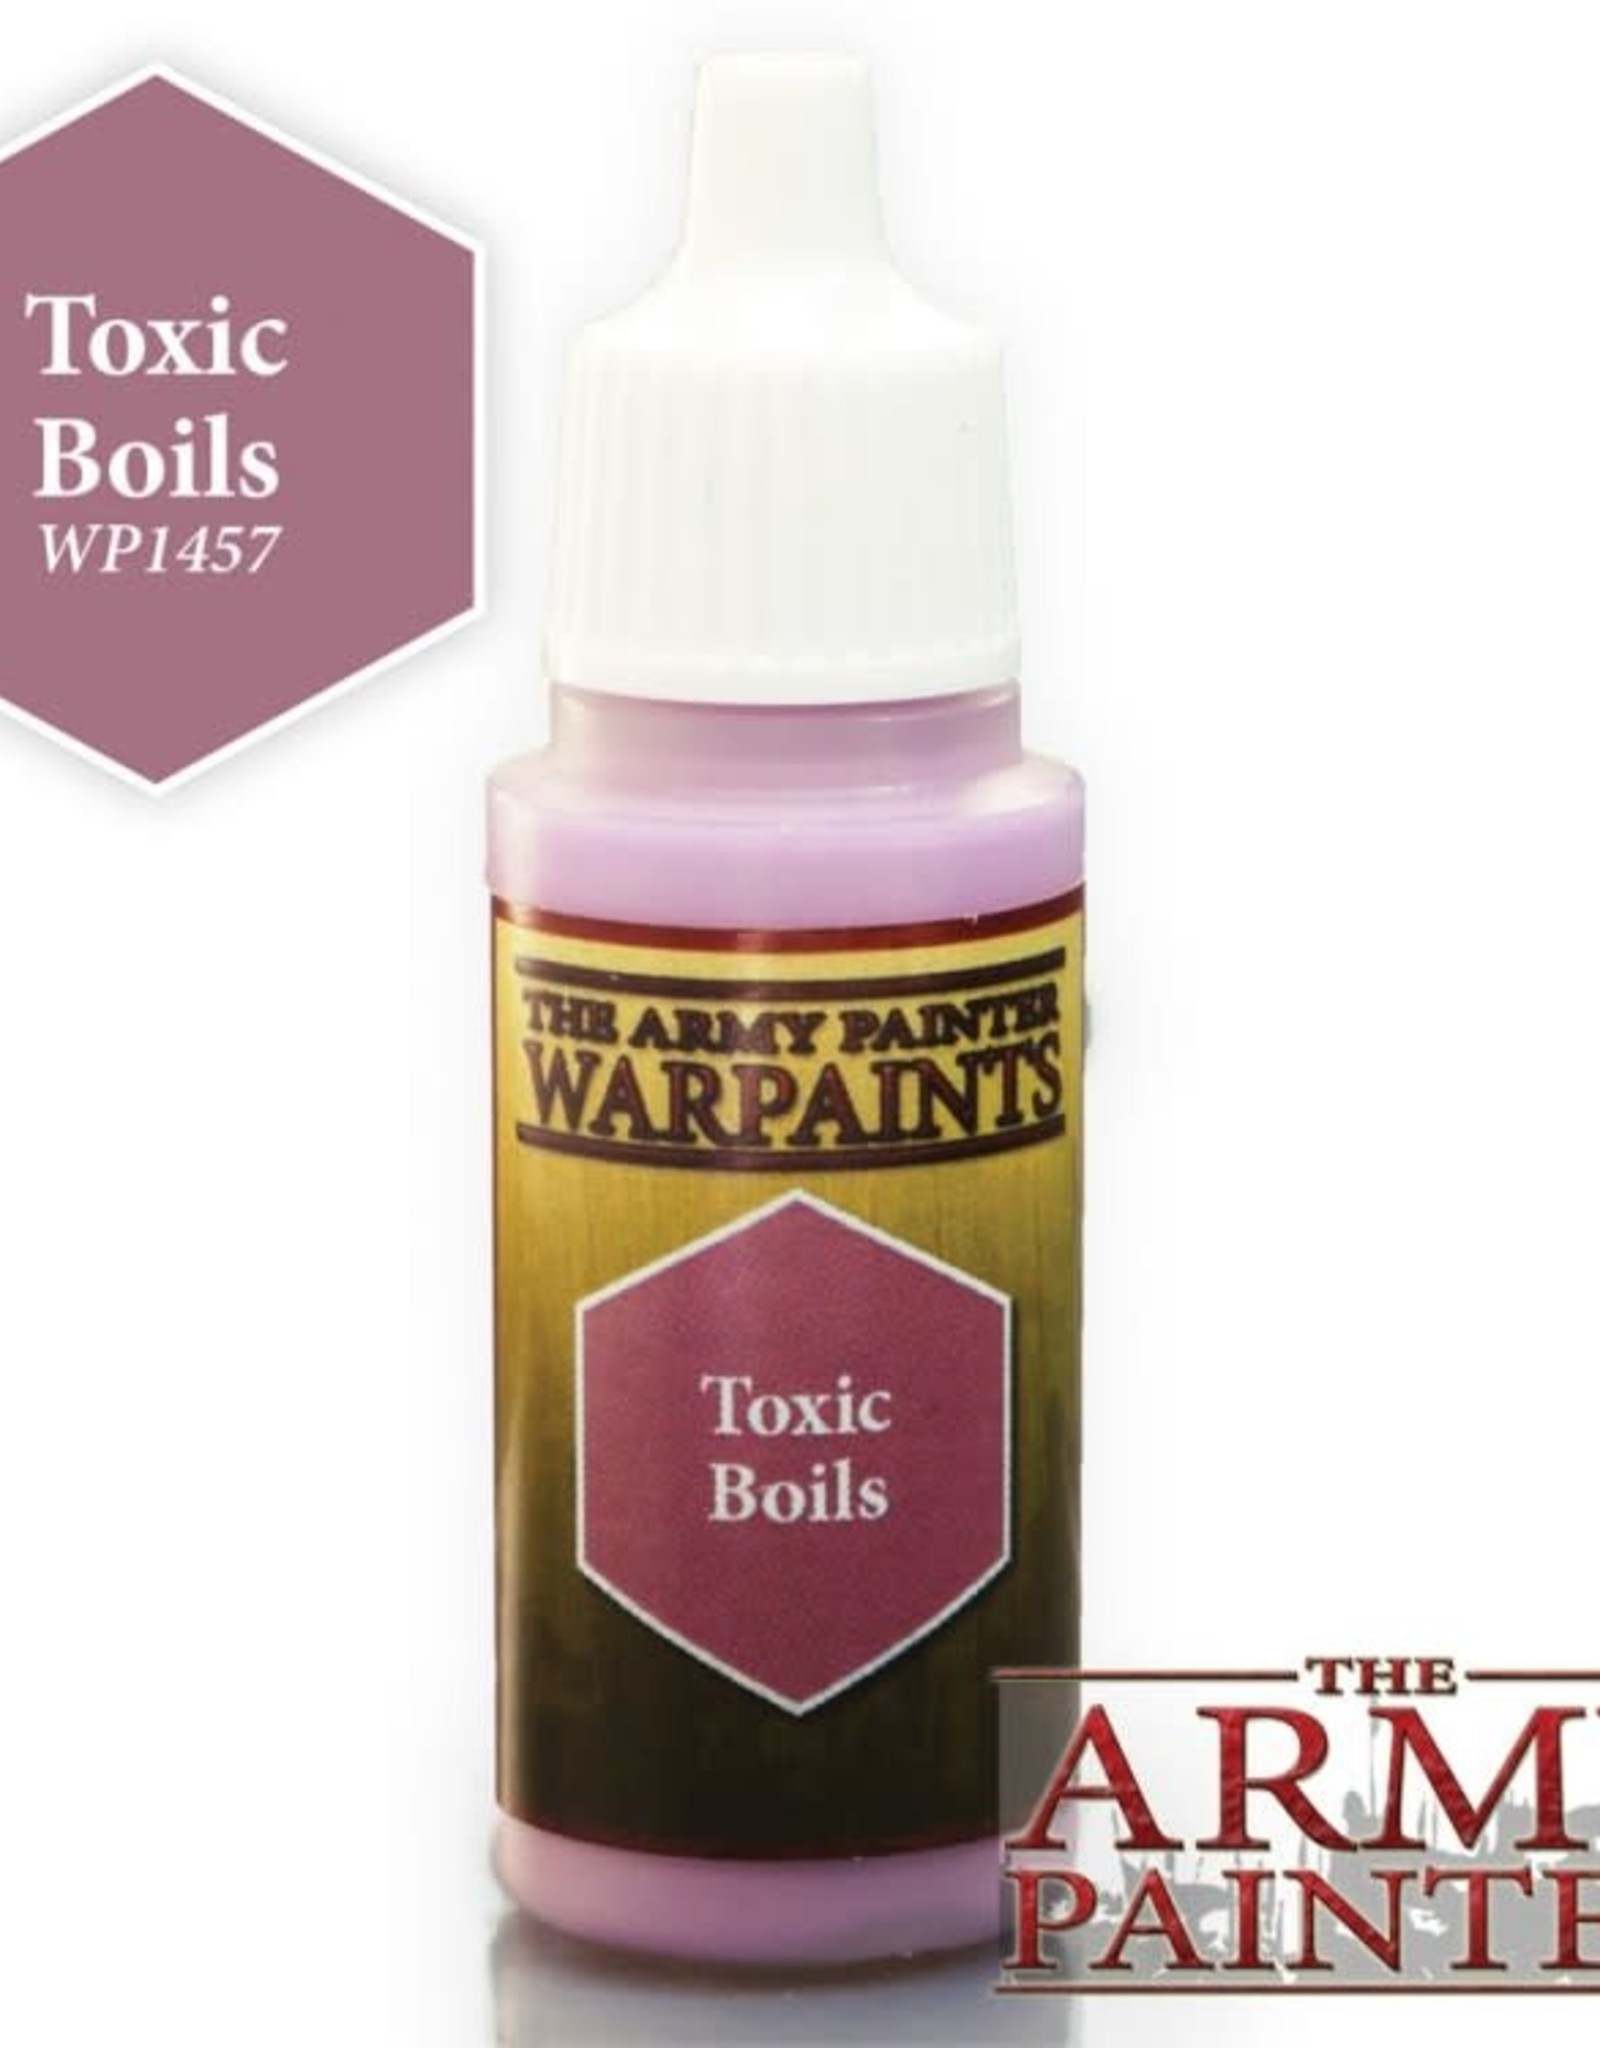 The Army Painter Warpaints - Toxic Boils